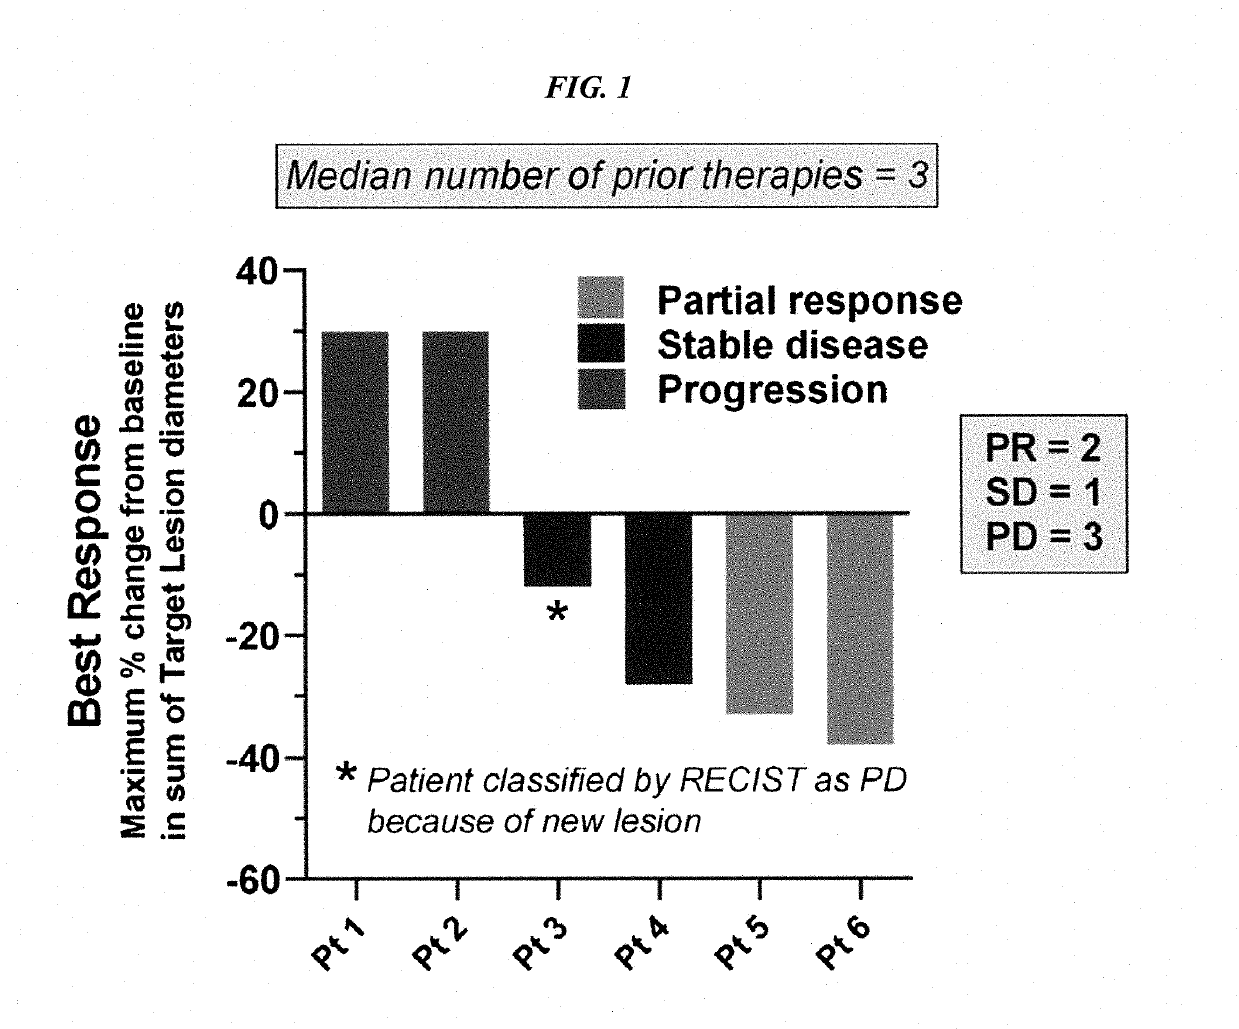 Therapy for metastatic urothelial cancer with the antibody-drug conjugate, sacituzumab govitecan (IMMU-132)